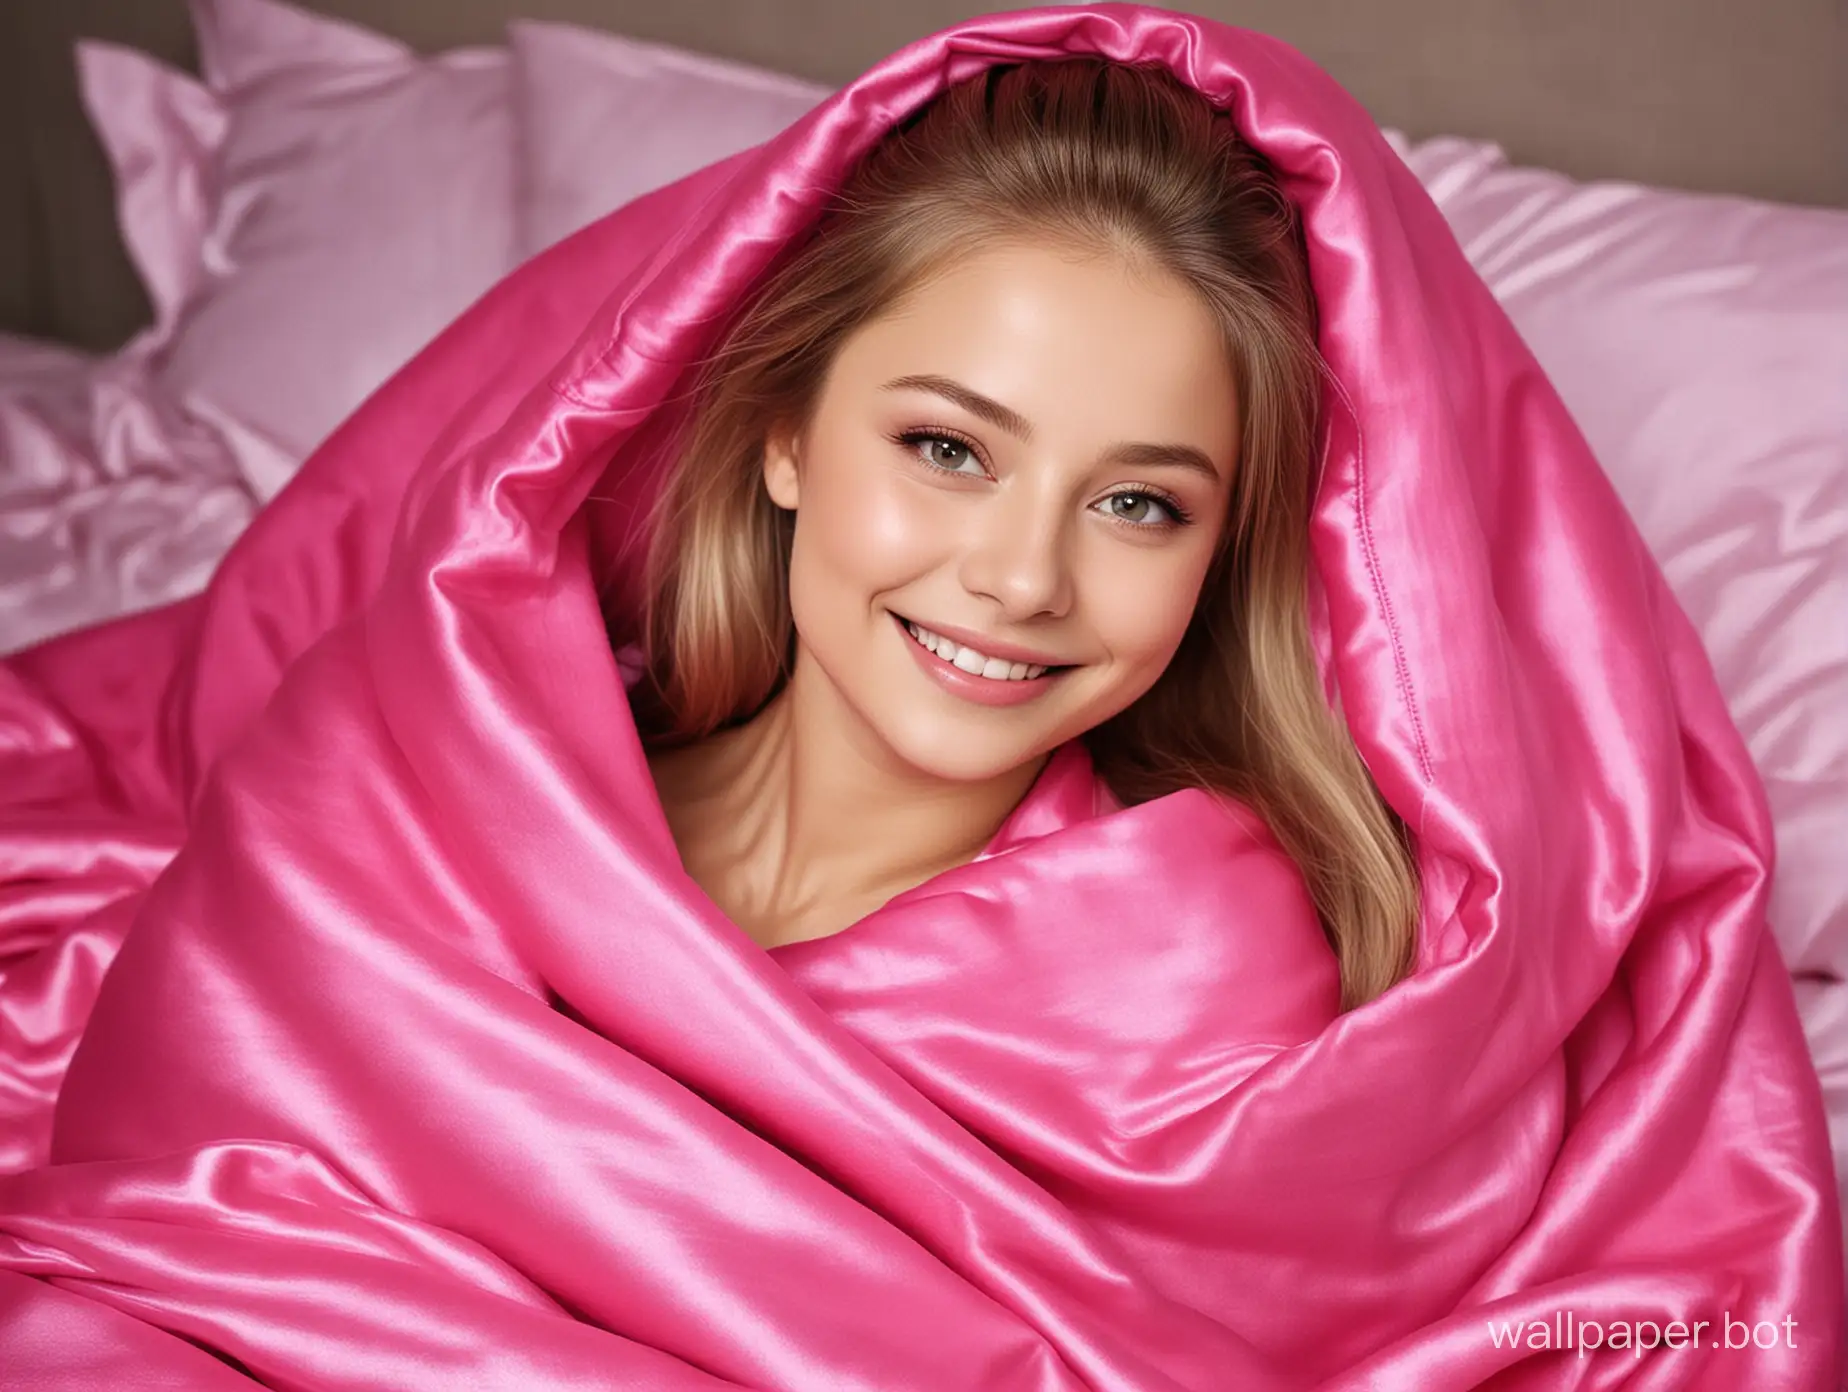 Yulia-Lipnitskaya-Smiling-in-Hot-Pink-Silk-Blanket-with-Silky-Hair